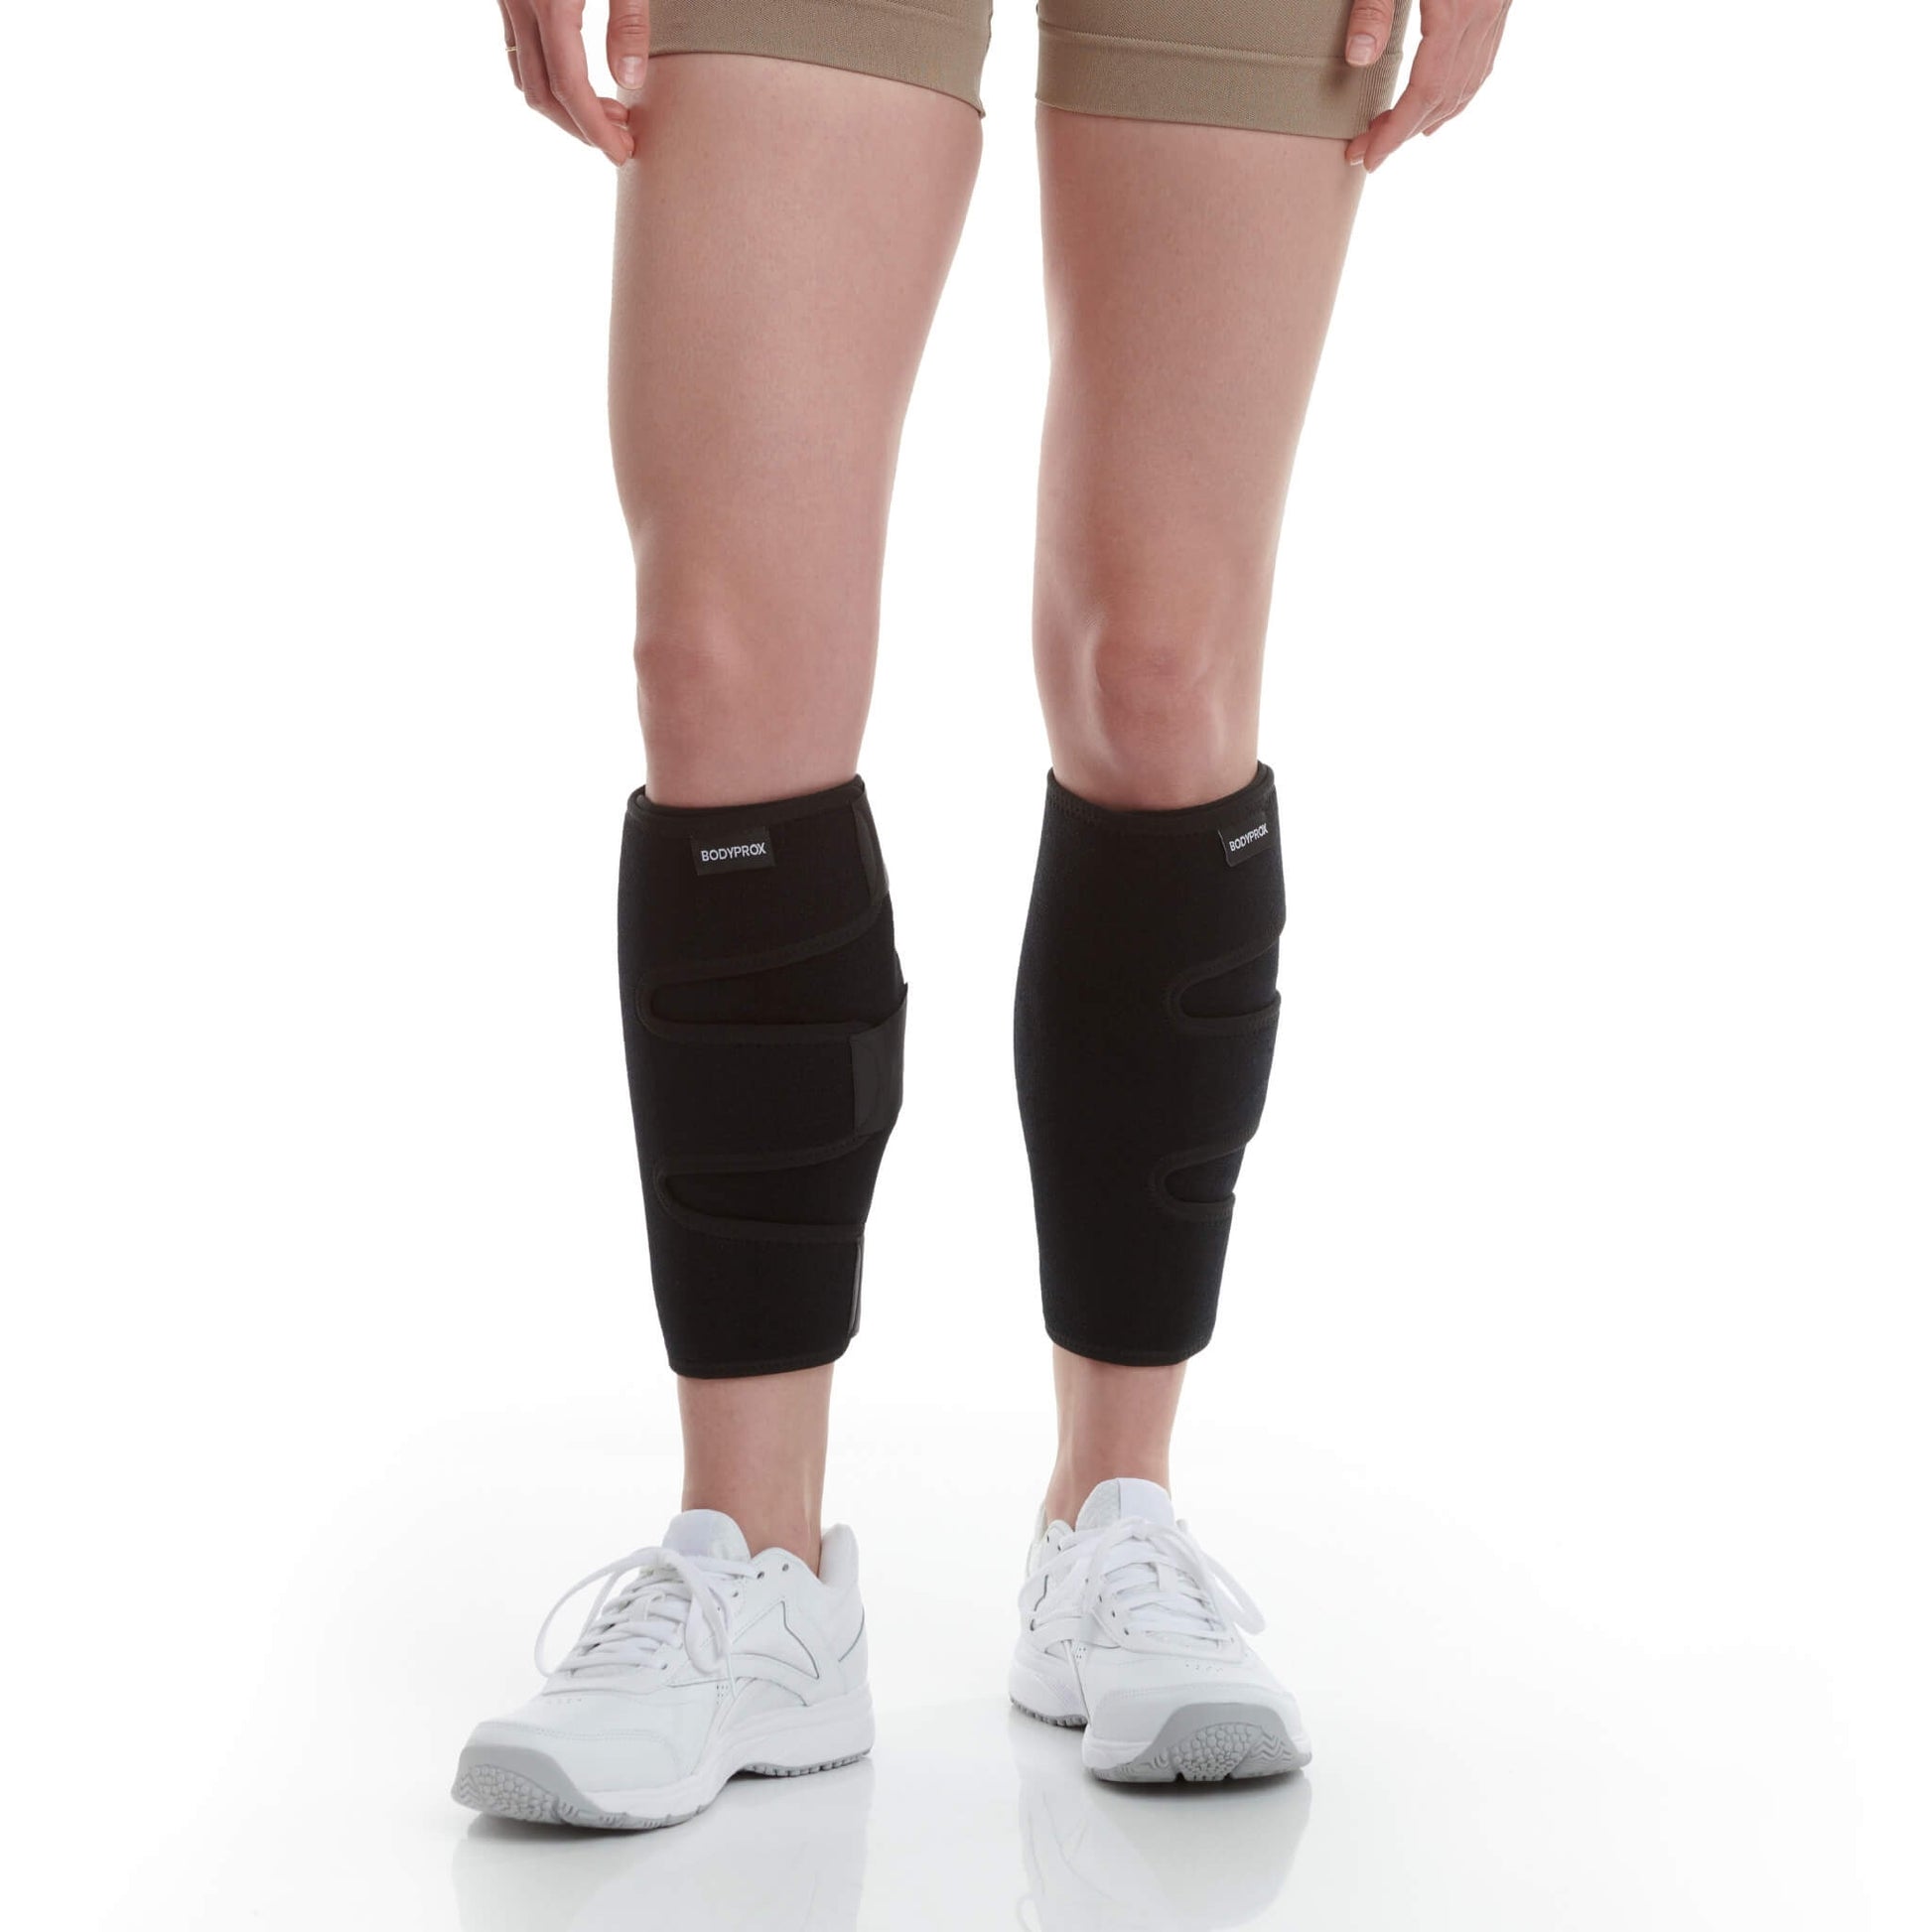 Heekooi Calf Brace, Shin Splint Compression Sleeve (1 Pair) for Swelling,  Edema, Hiking, Training, Adjustable Calf Support, Shin Brace for Men and  Women 